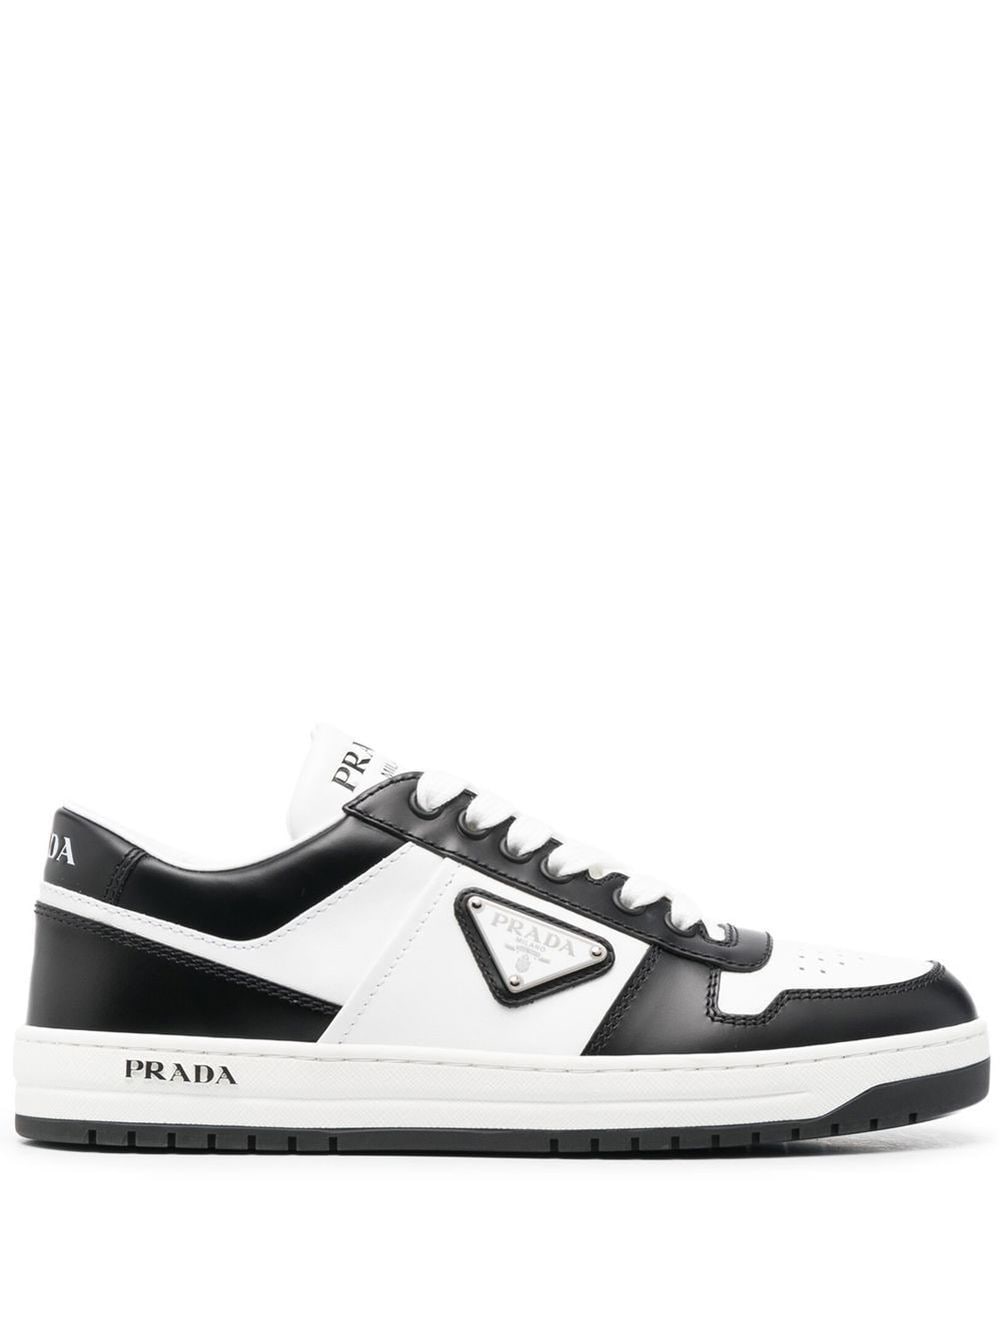 Downtown leather sneakers | Prada 